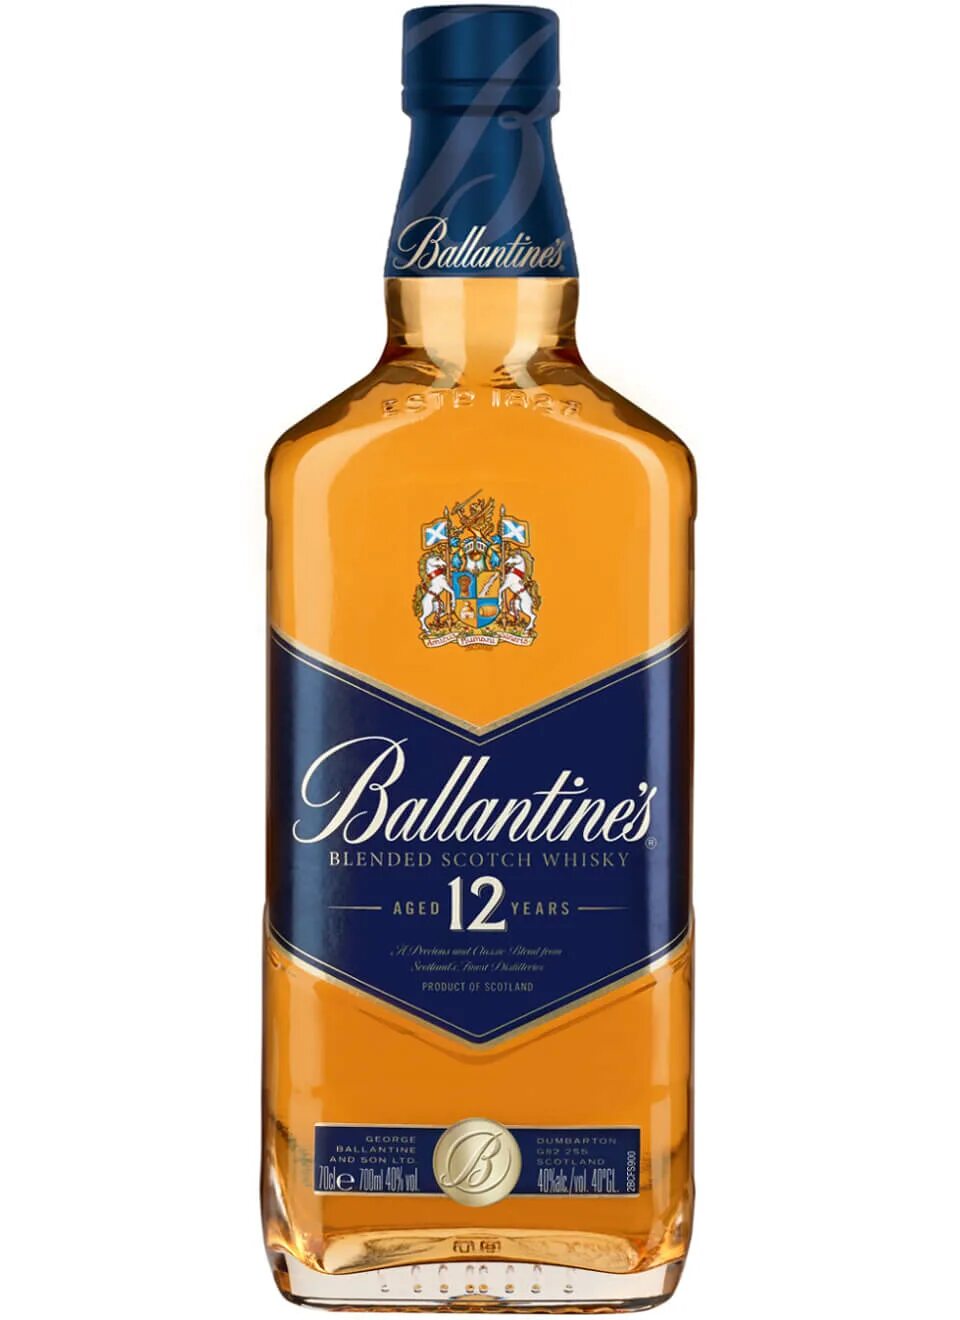 Balantais цена. Виски Blended Scotch Whisky Баллантайнс. Балантайн скотч виски шотландский. Виски "Ballantine's" 12 years old. Баллантайнс 4.5л.